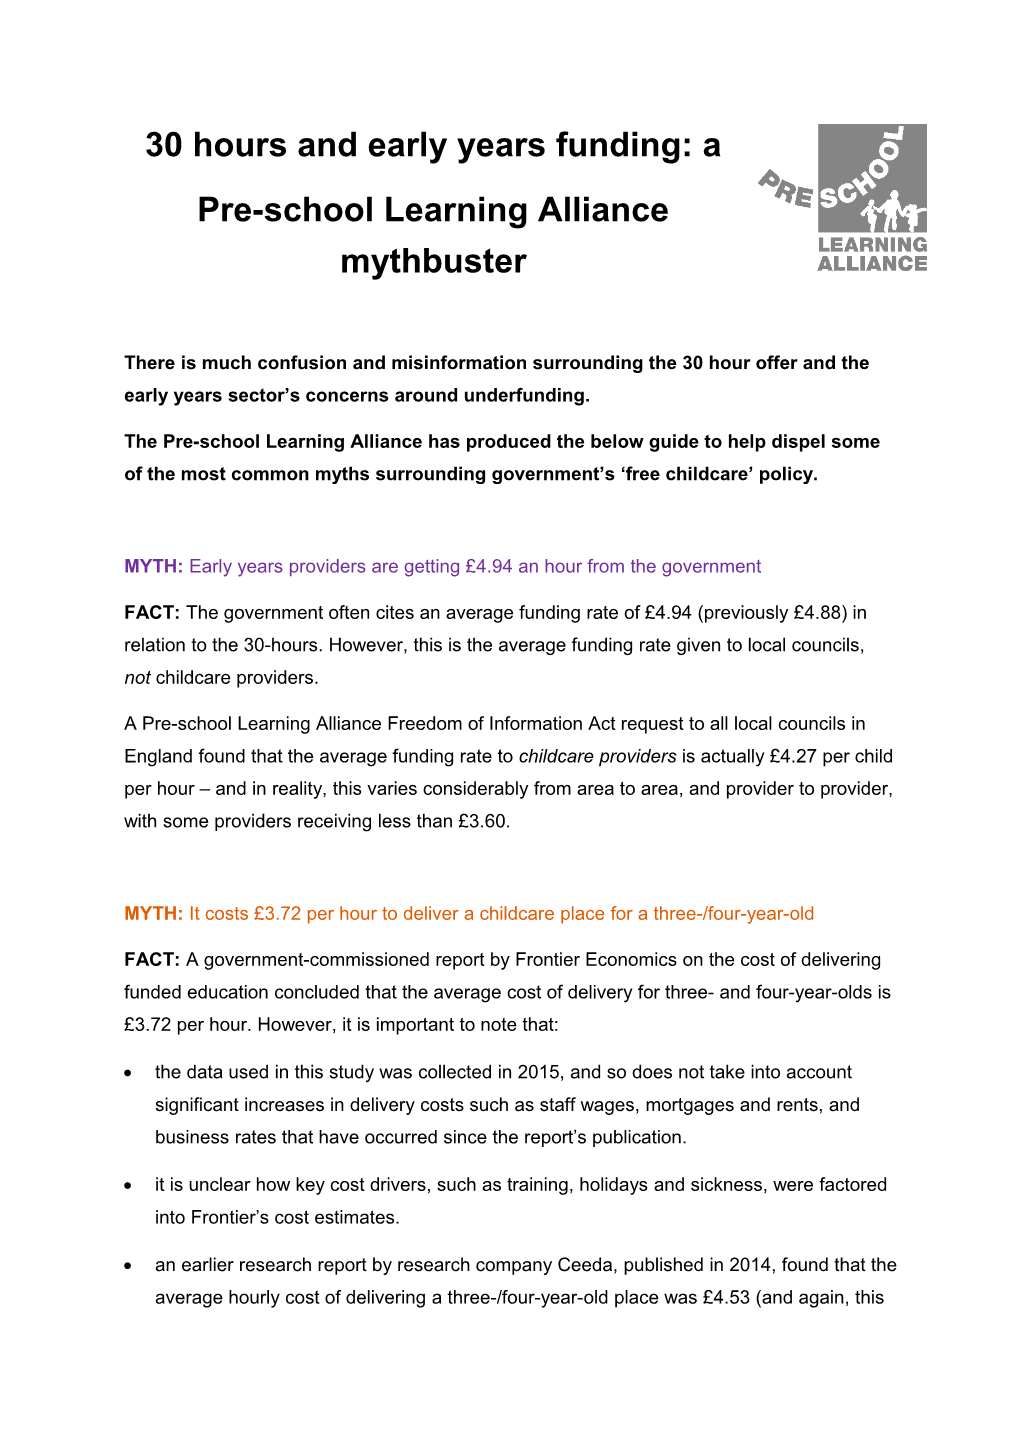 Pre-School Learning Alliance Mythbuster